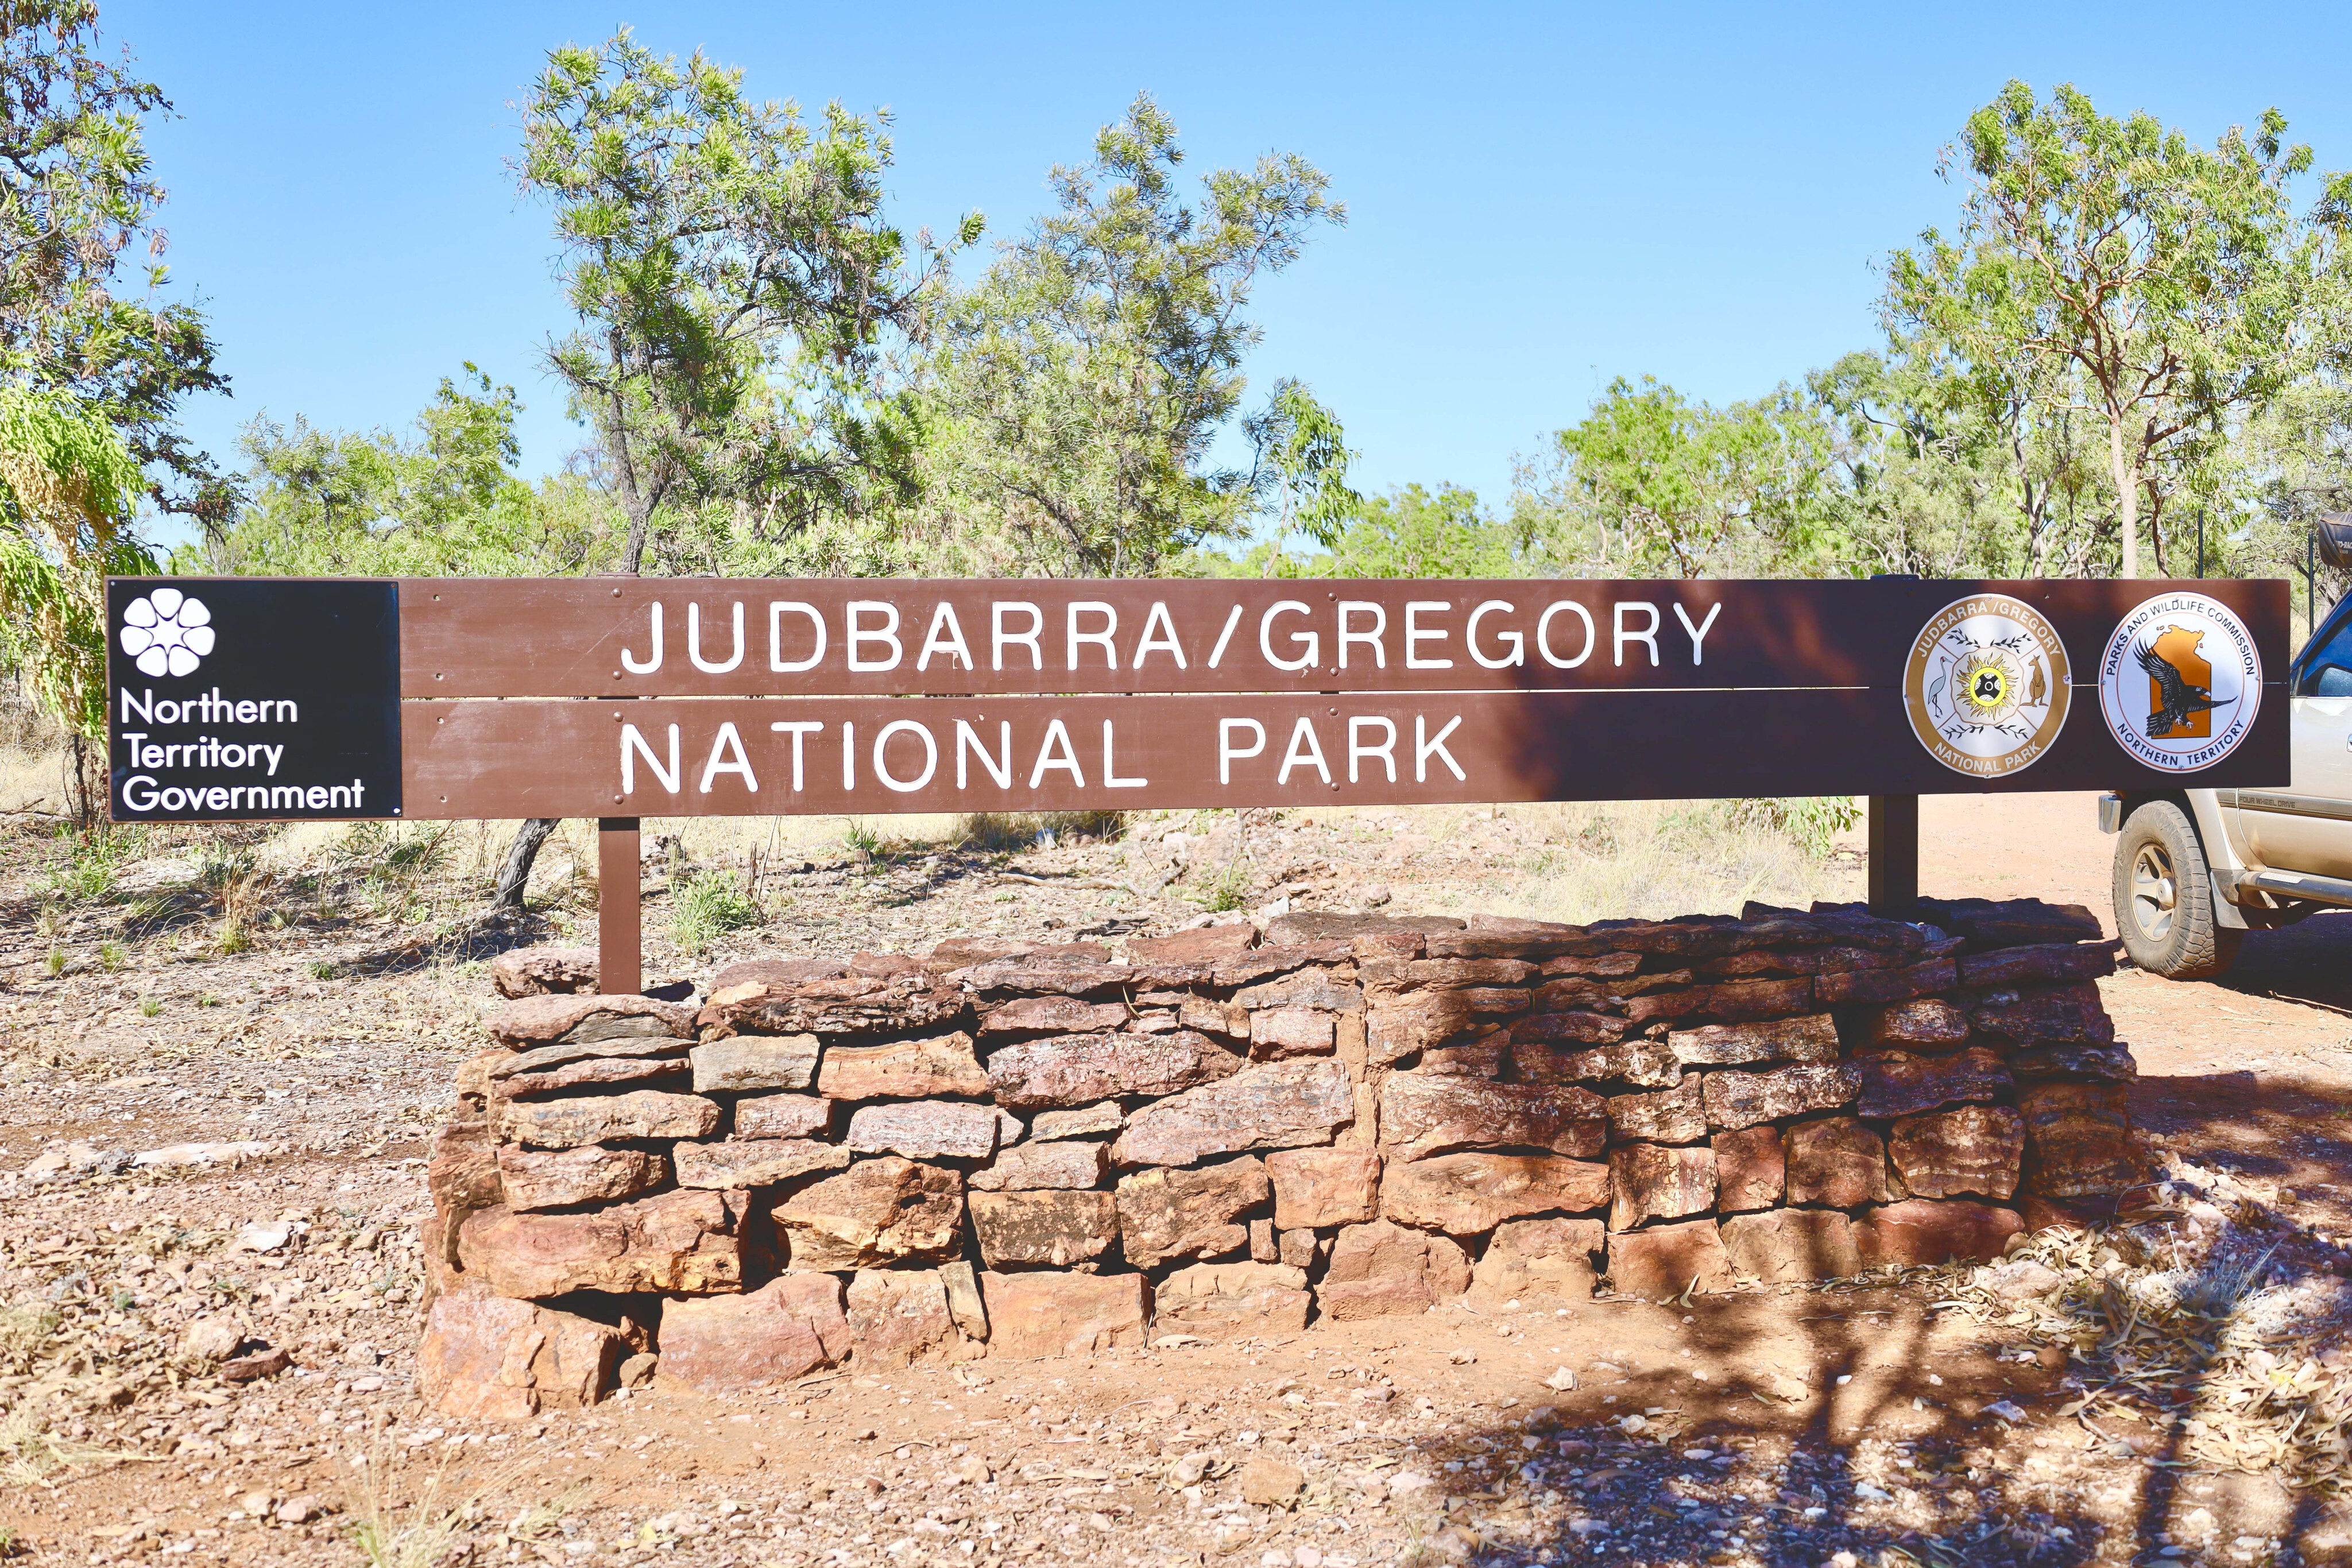 a3871c28/gregory np sign 4x4 australia judbarra national park jpg